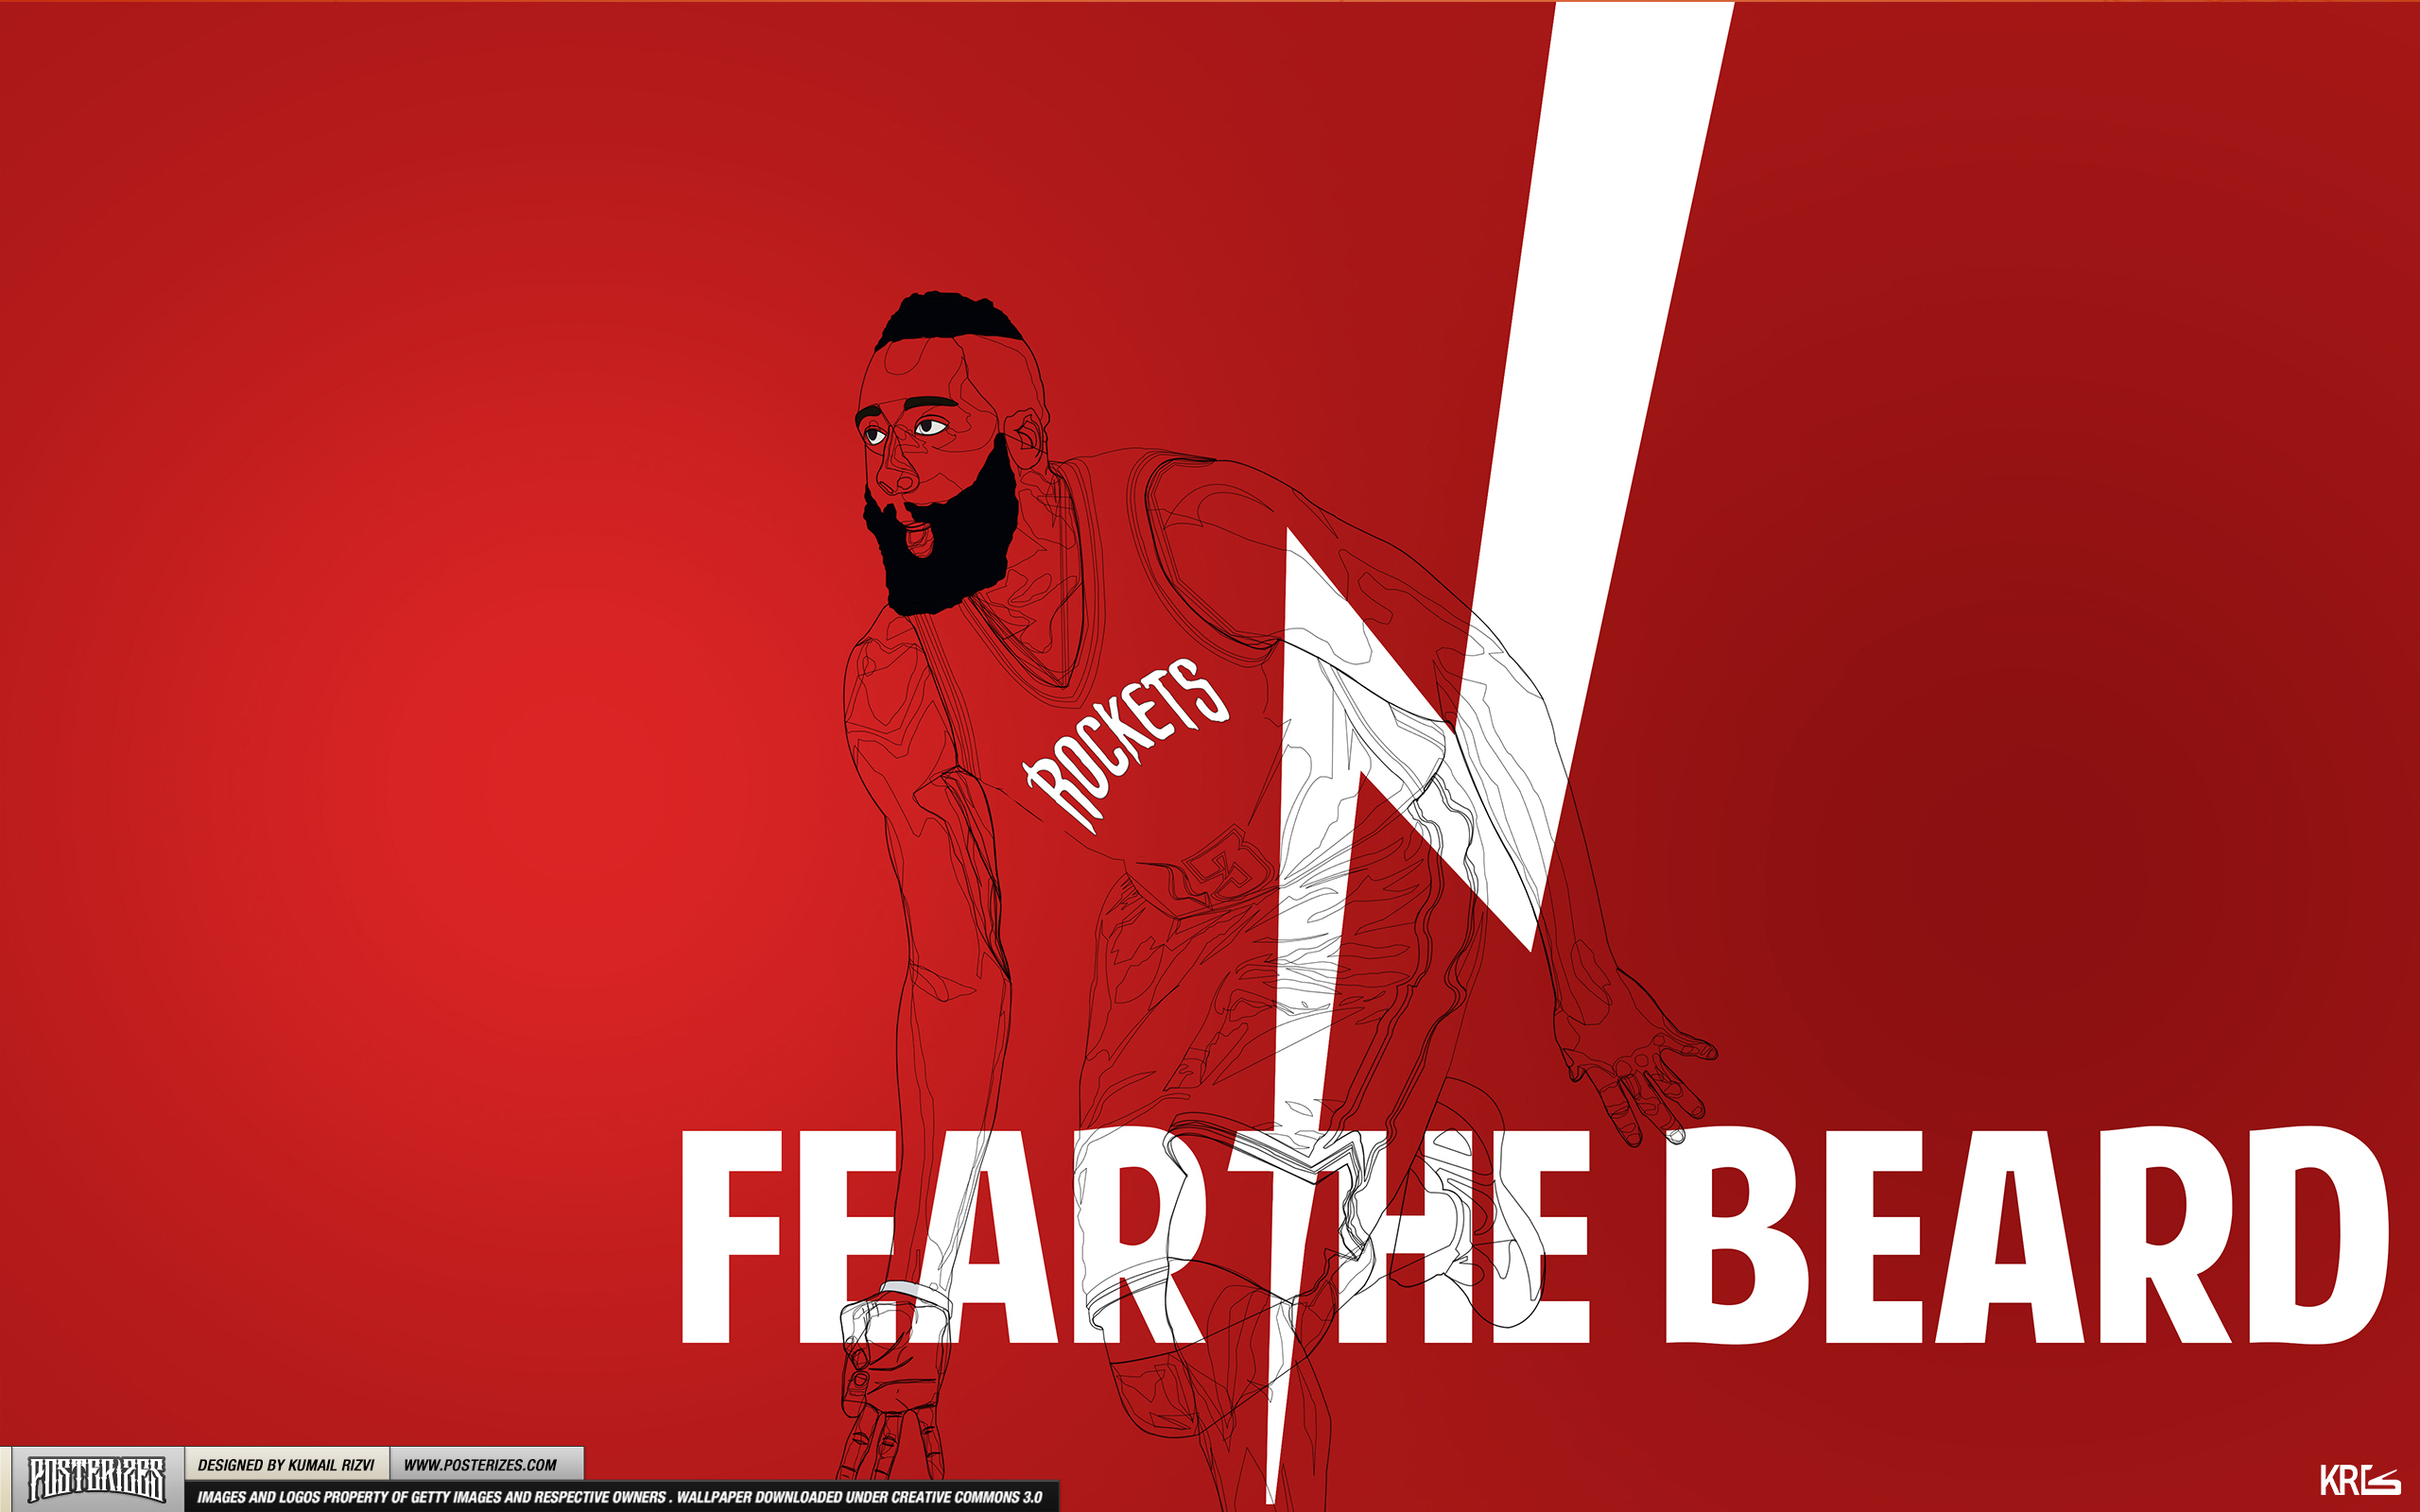 Houston Rockets Basketball Nba Wallpaper Background